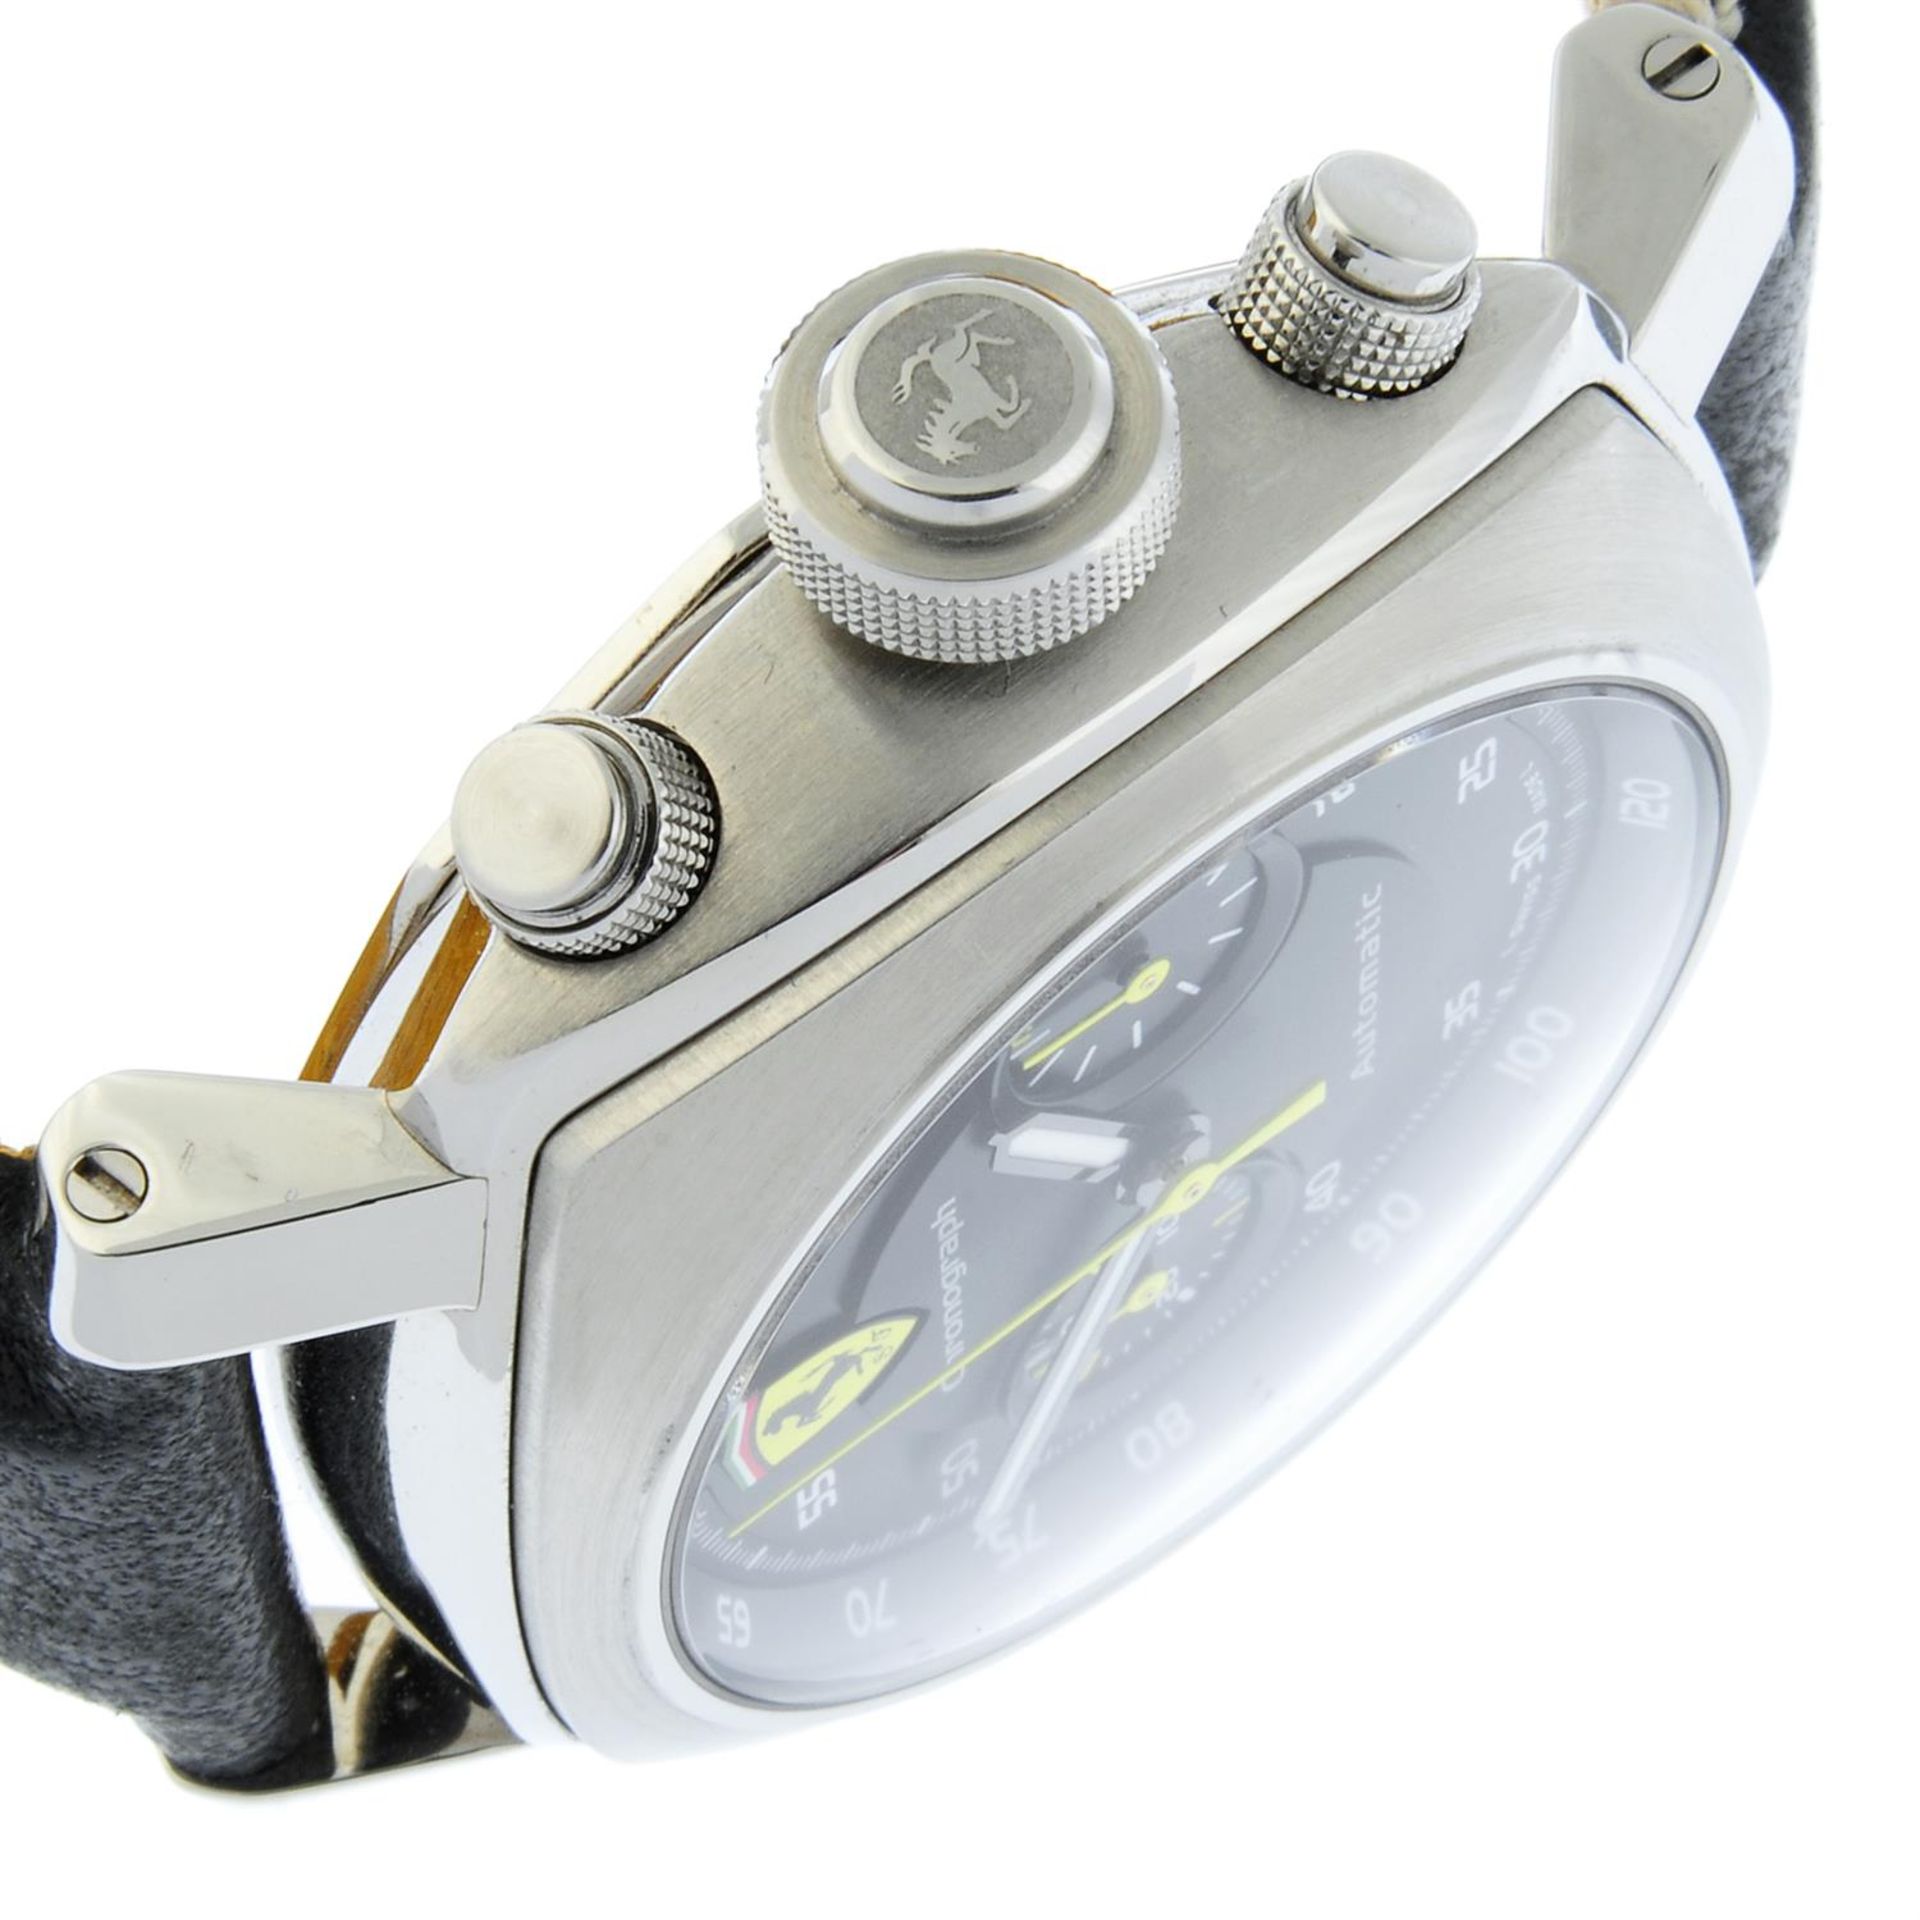 Panerai - a Ferrari Granturismo watch, 40mm. - Image 3 of 4